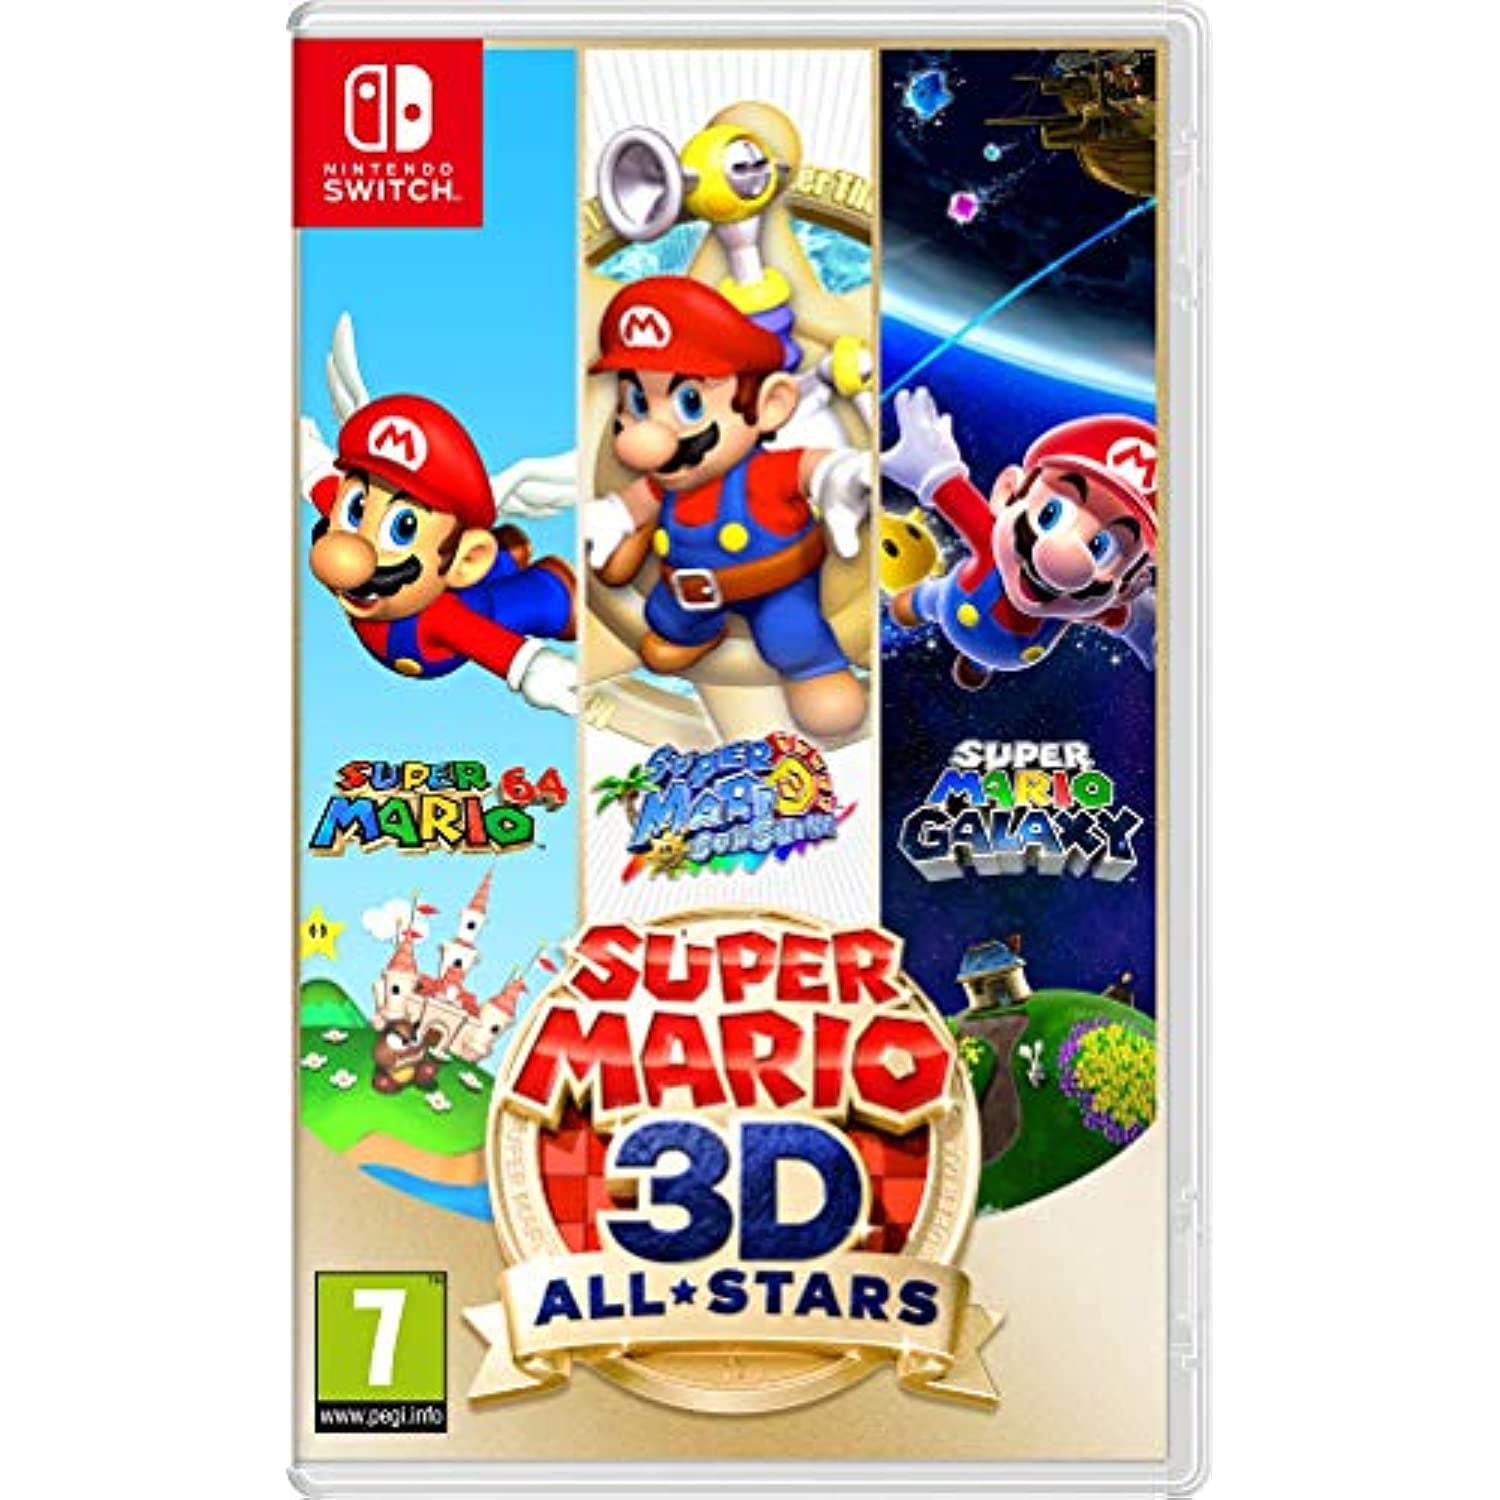  Super Mario Odyssey [Nintendo Switch] (German Version) : Video  Games